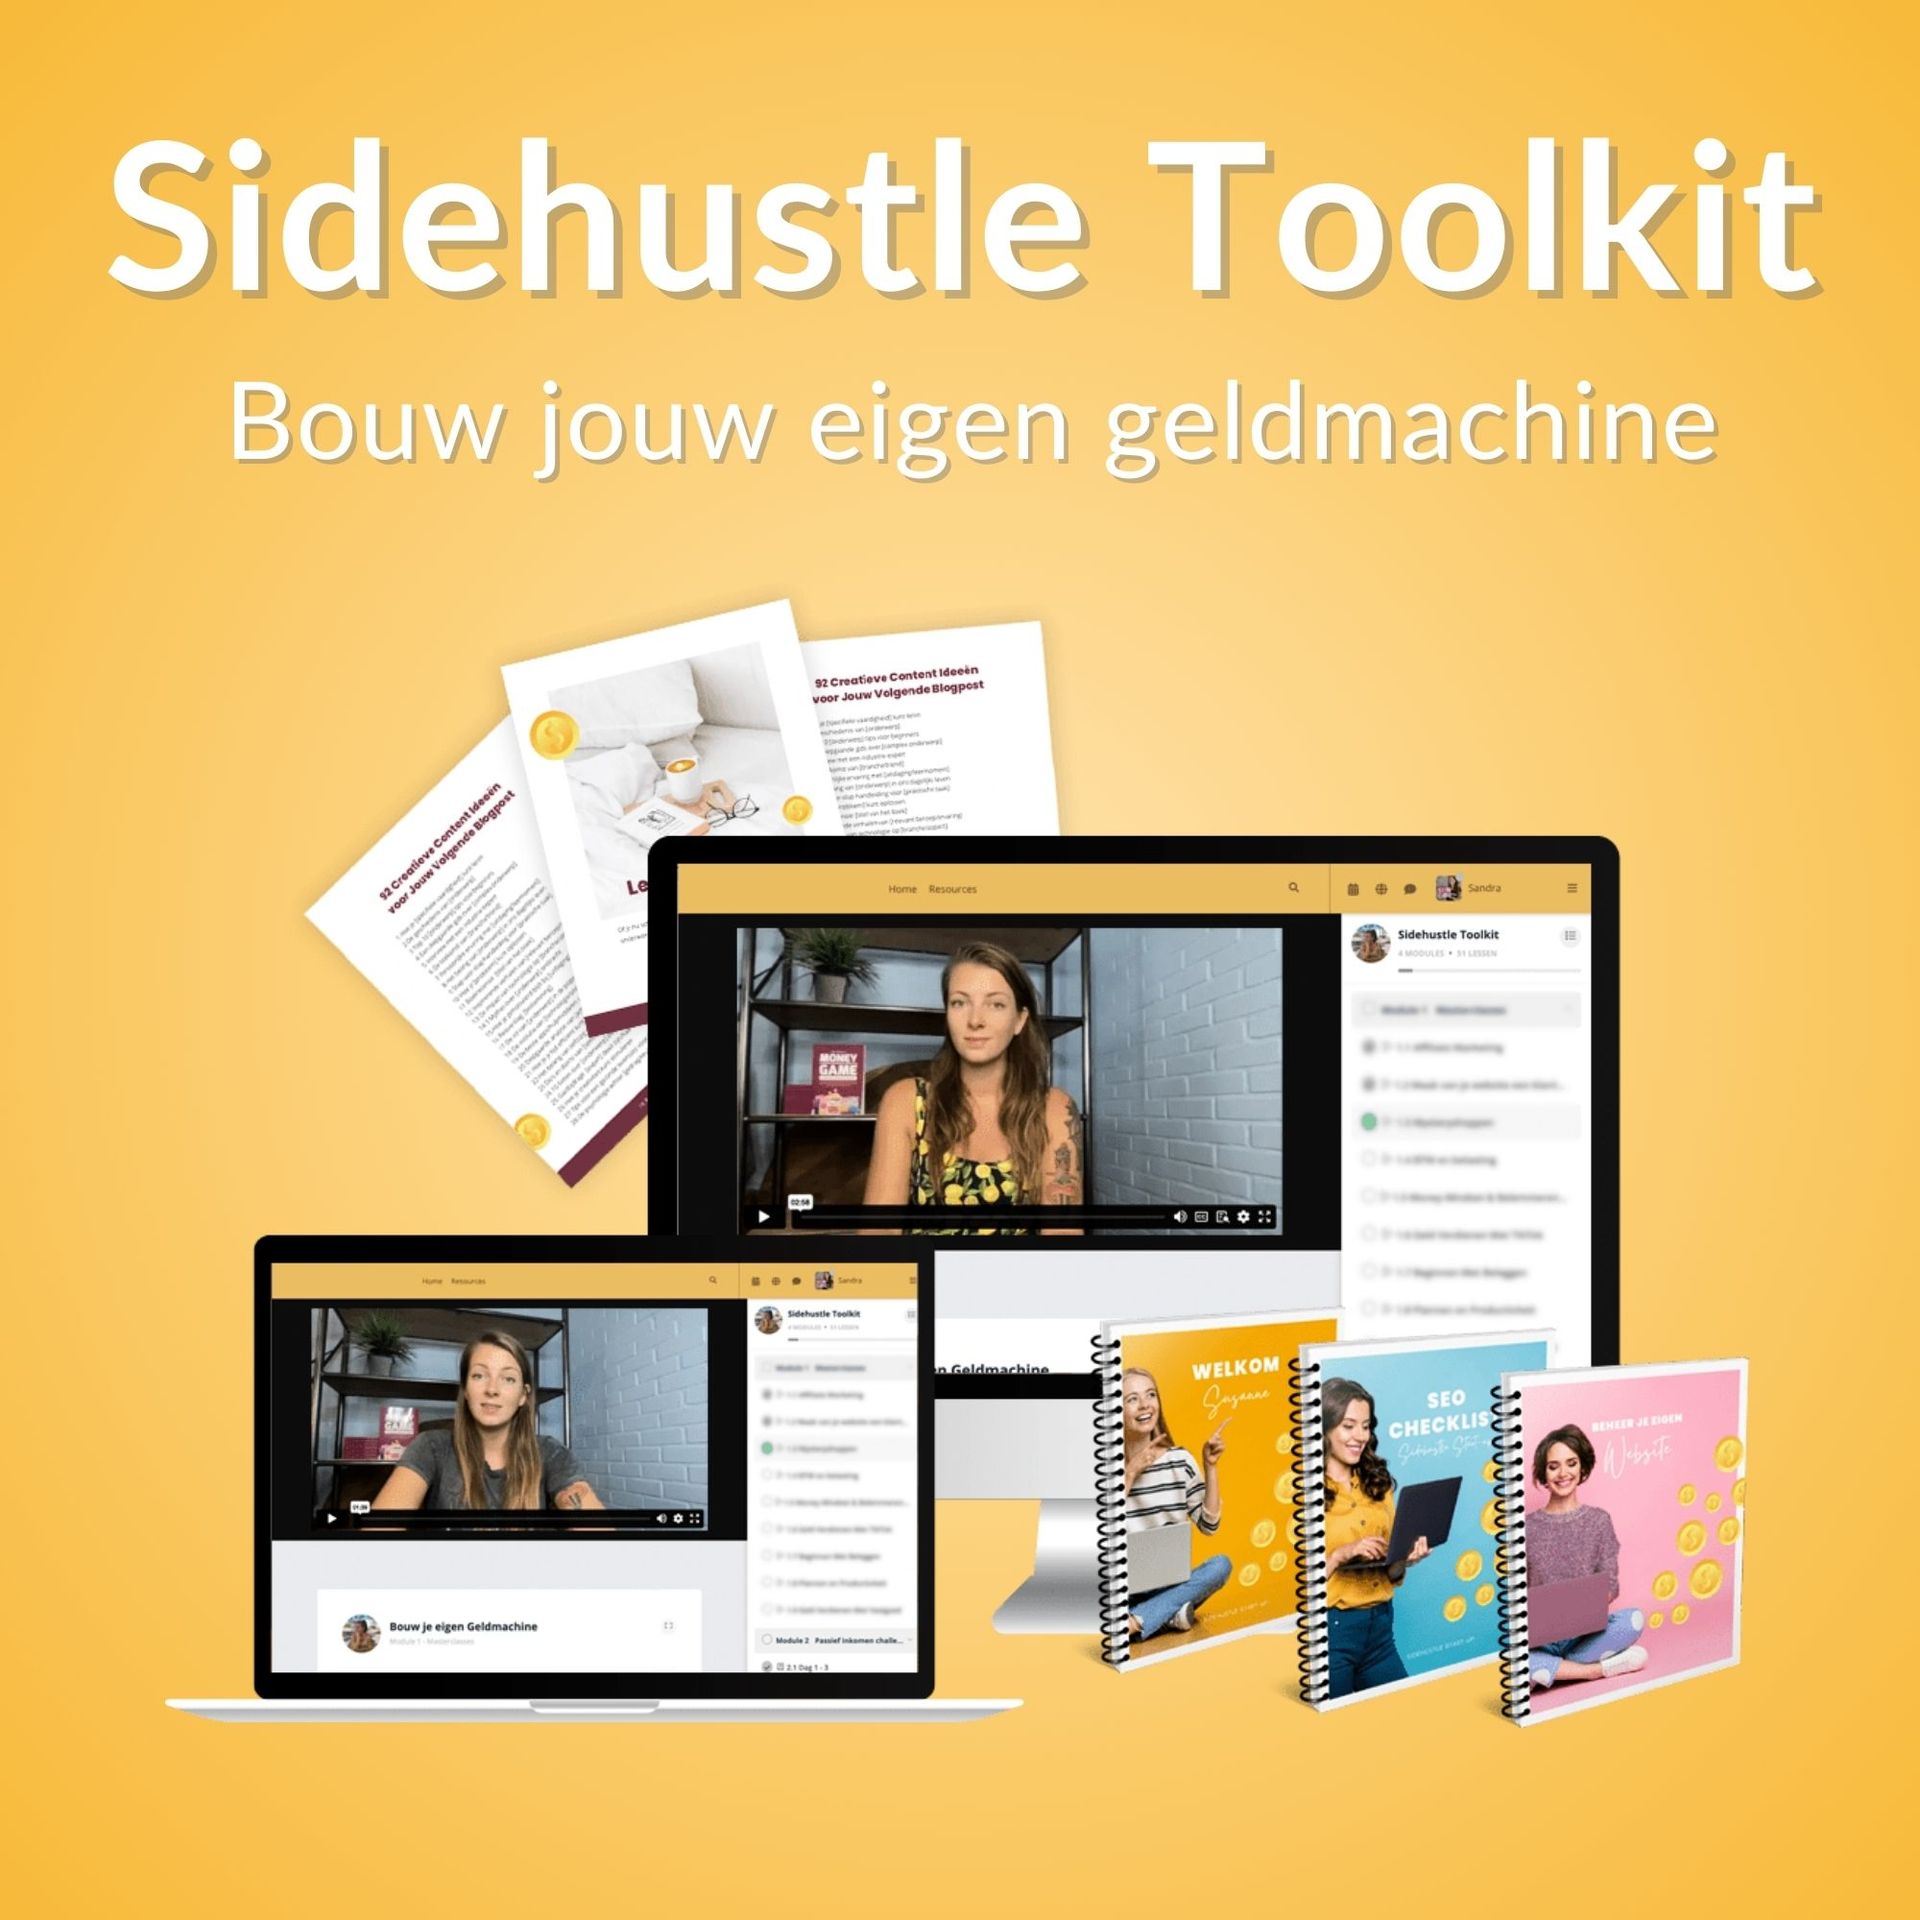 side hustle toolkit
ikbenjanmodaal.nl